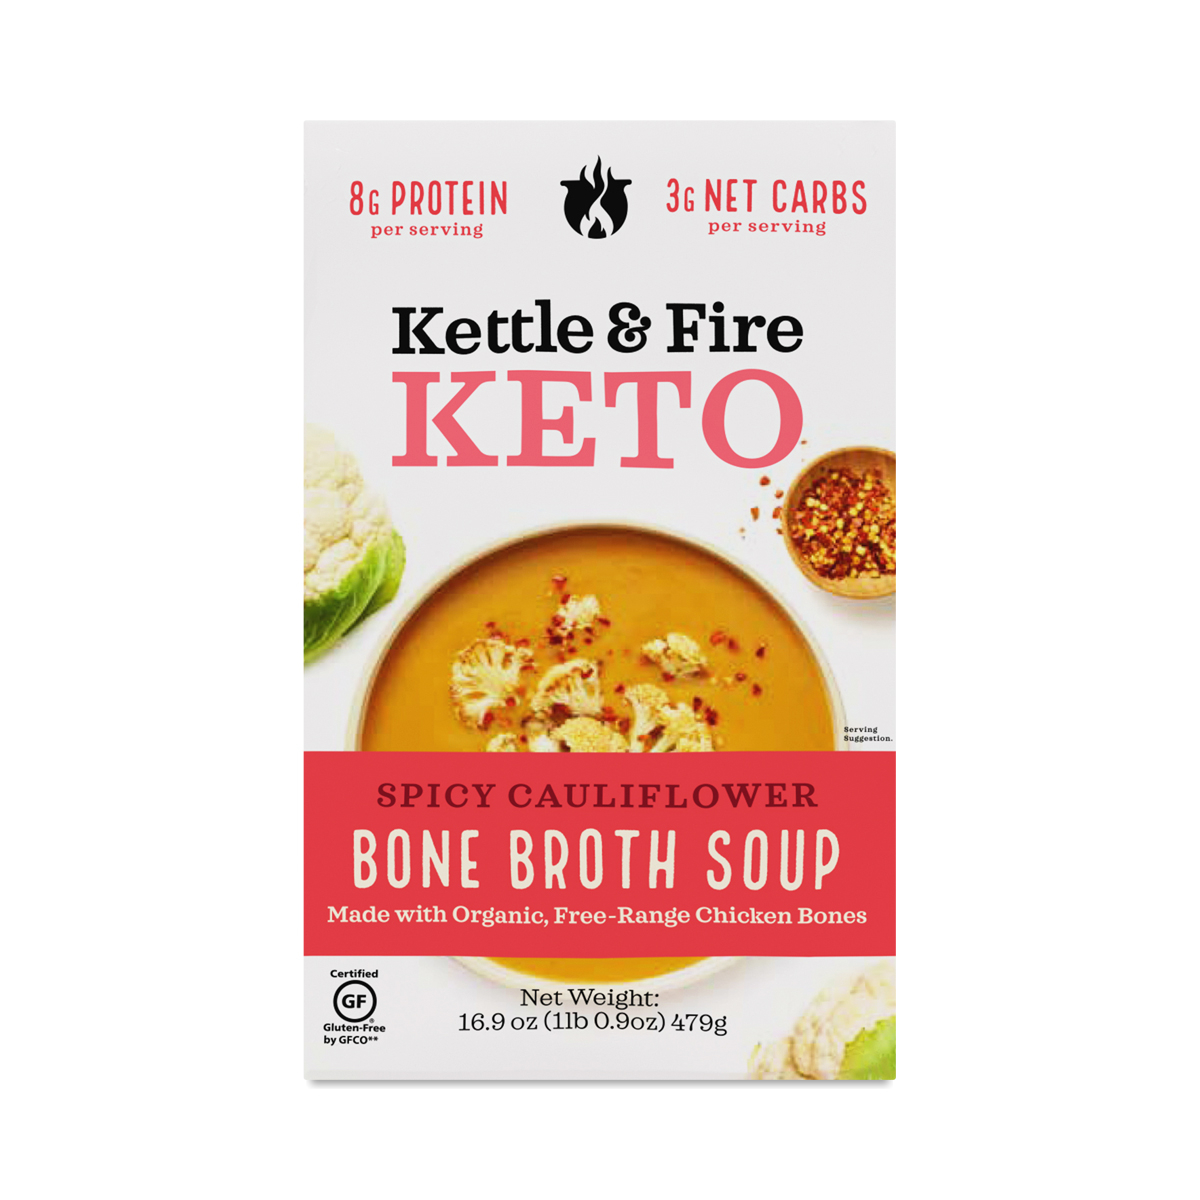 Kettle & Fire Keto Chicken Bone Broth, Spicy Cauliflower Soup 16.9 oz carton